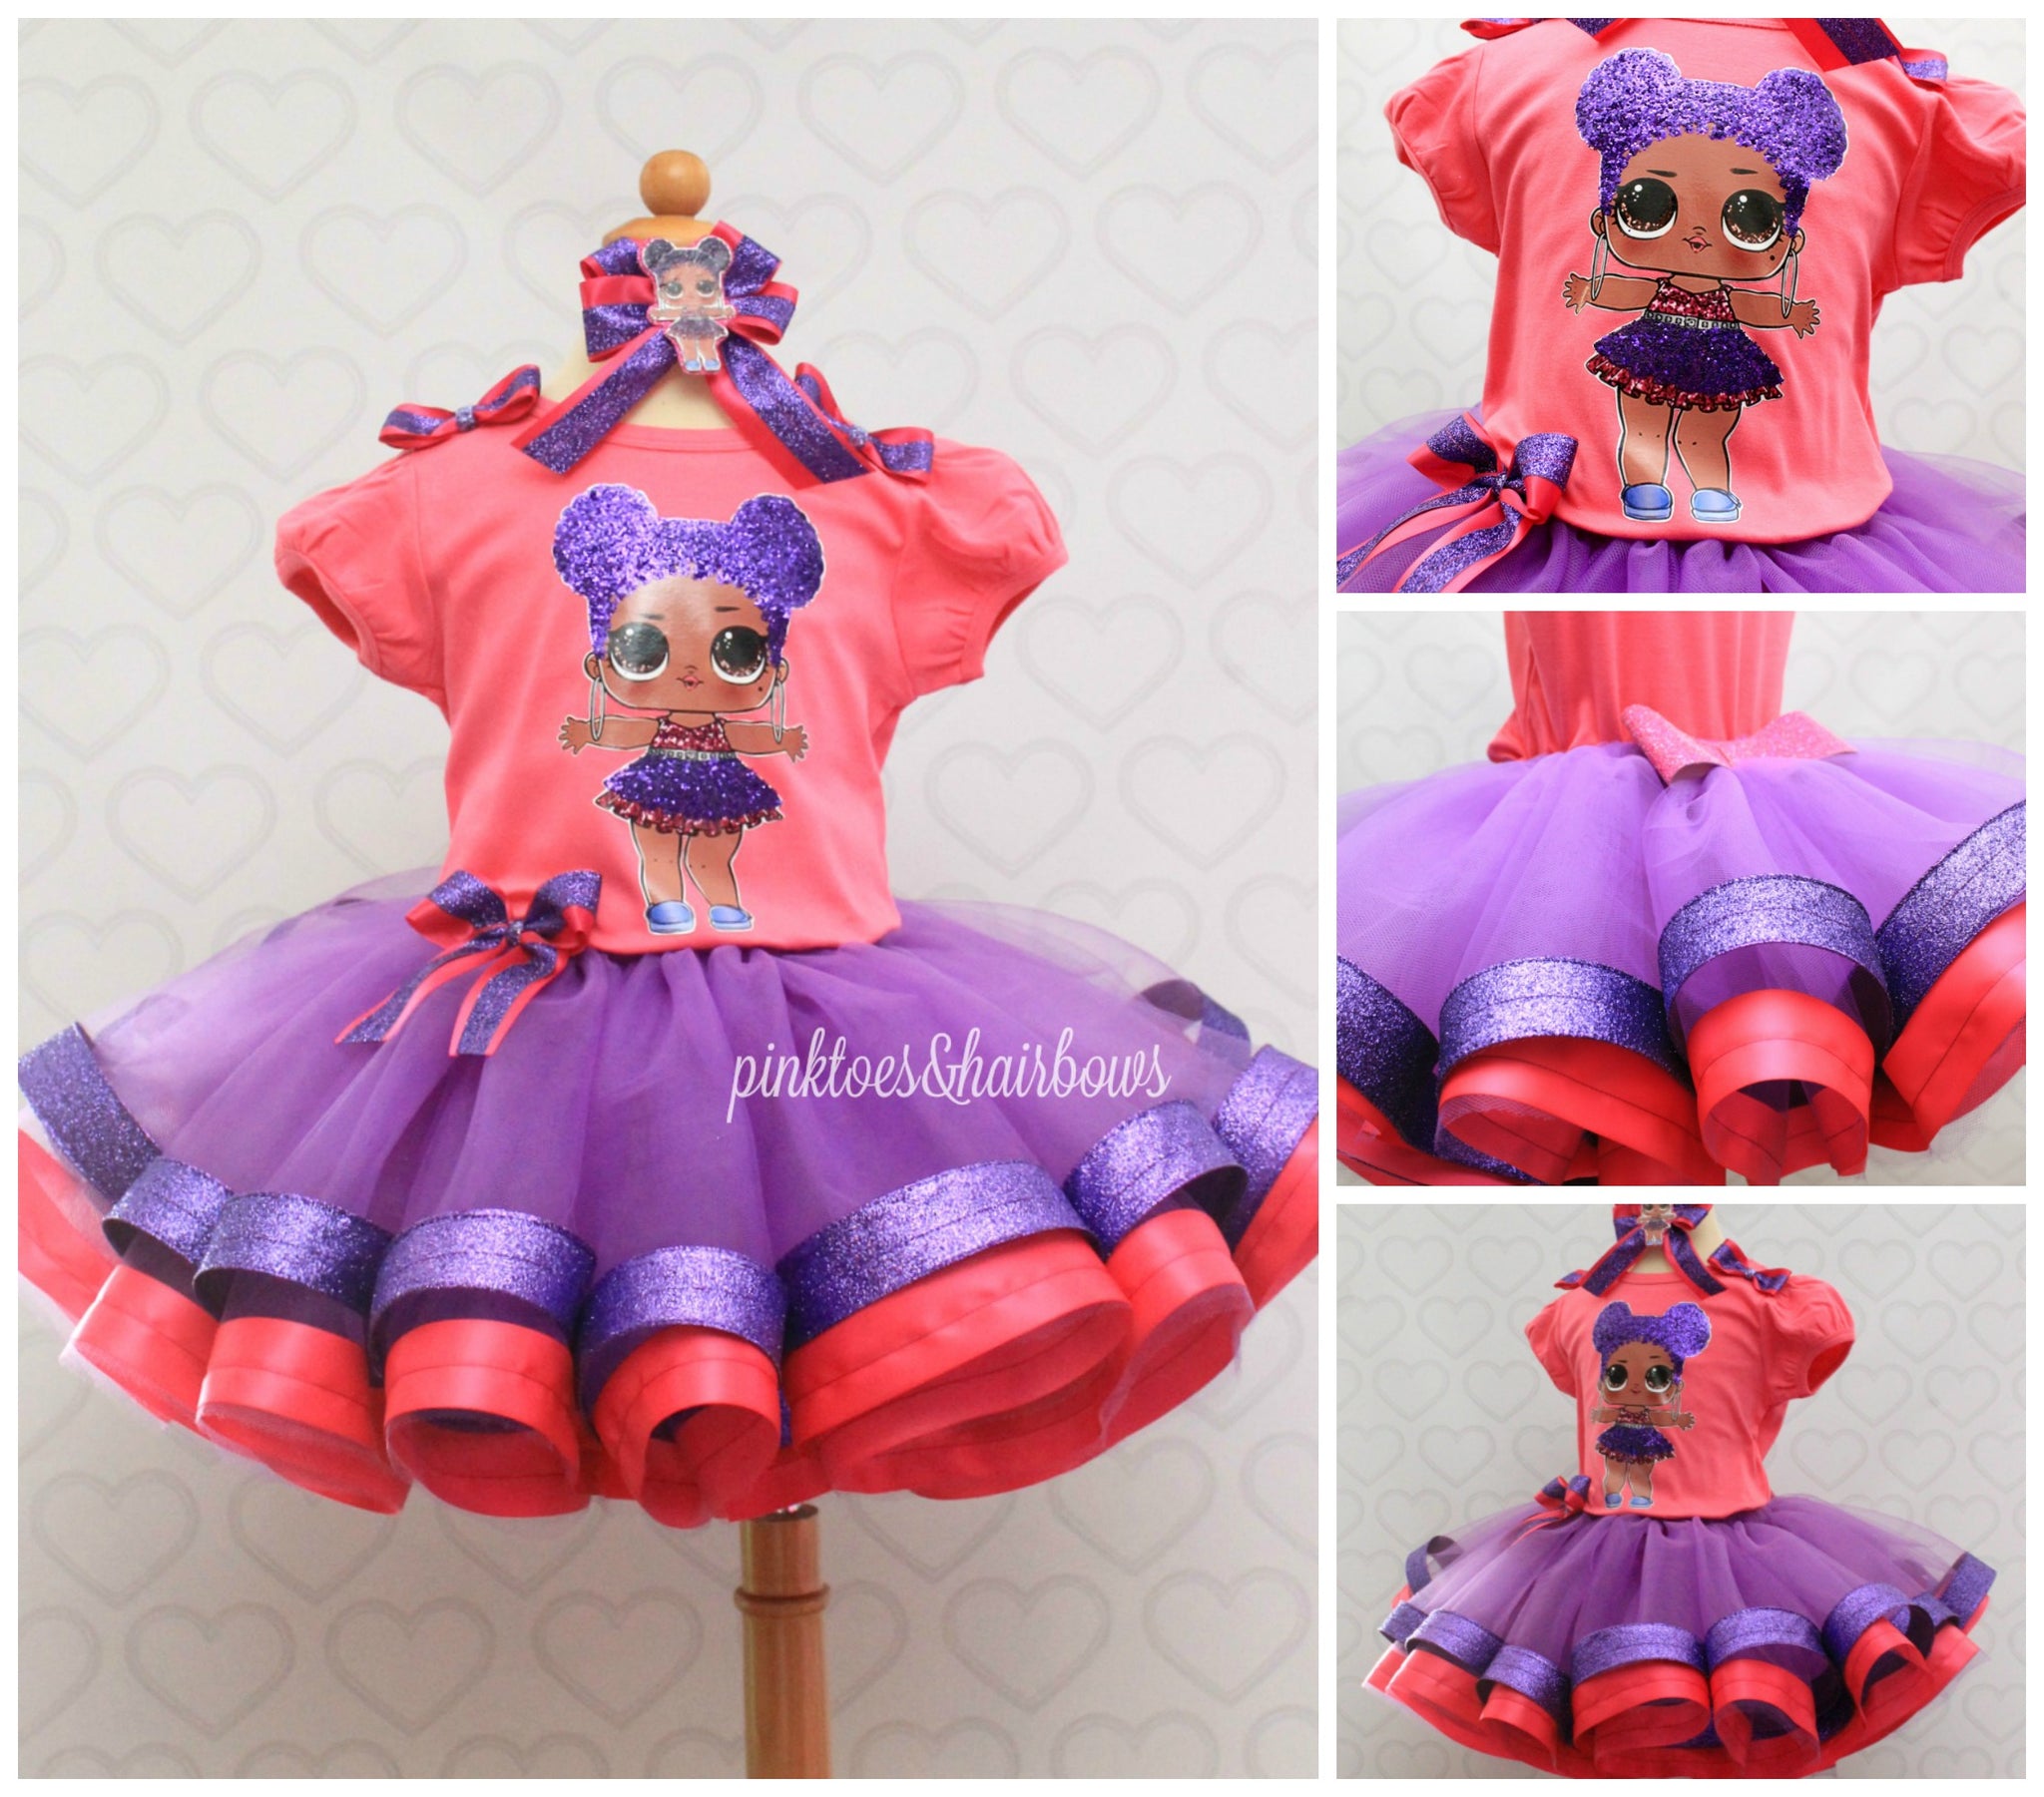 lol purple queen costume